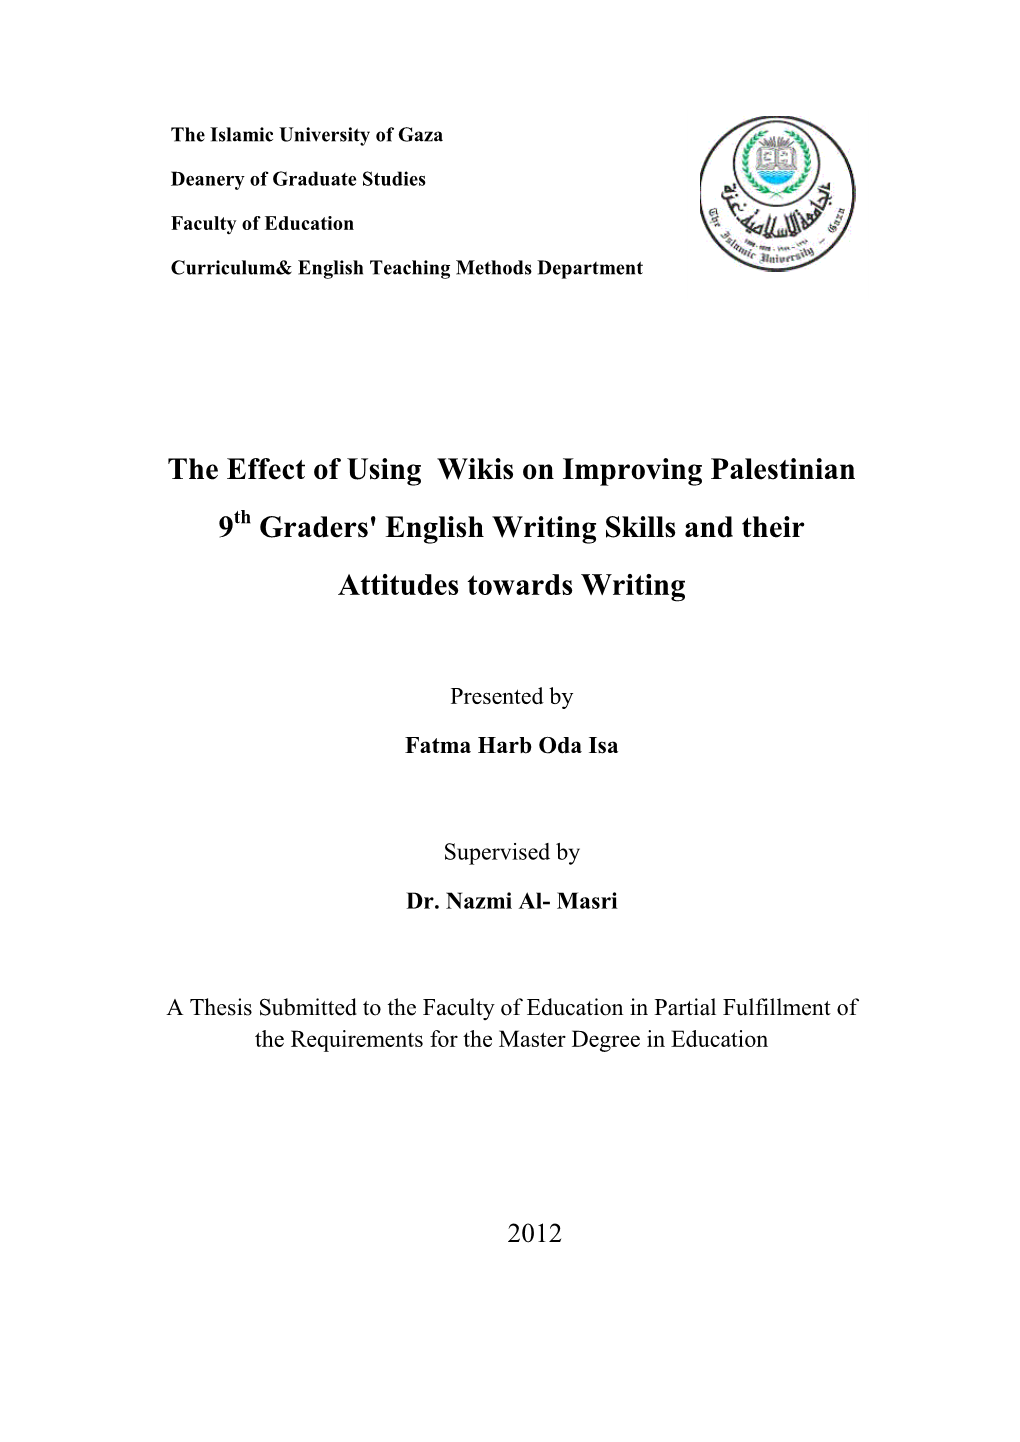 Graders' English Writing Skills and Their Attitudes Towards Writing